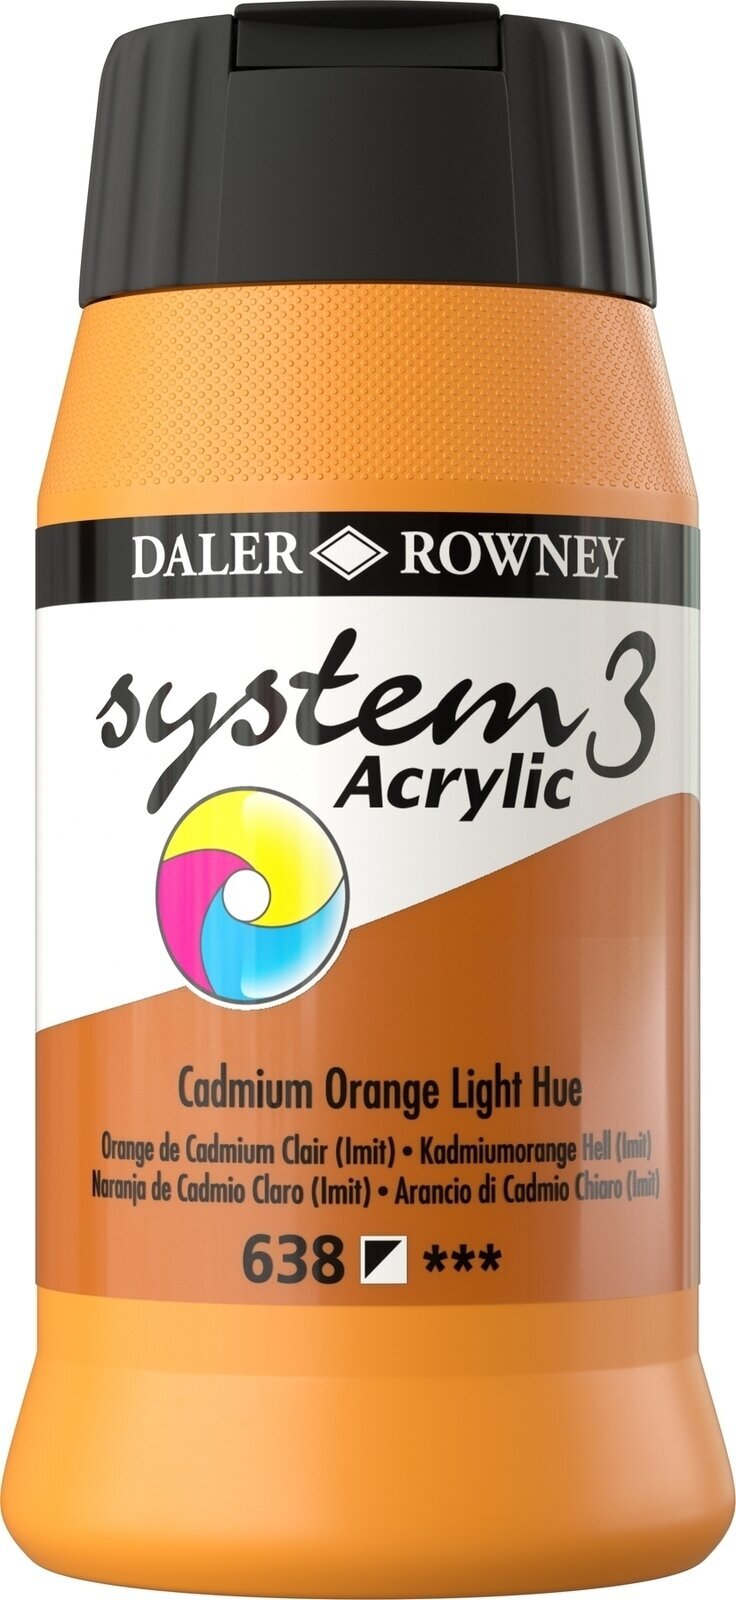 Acrylic Paint Daler Rowney System3 Acrylic Paint Cadmium Orange Light Hue 500 ml 1 pc